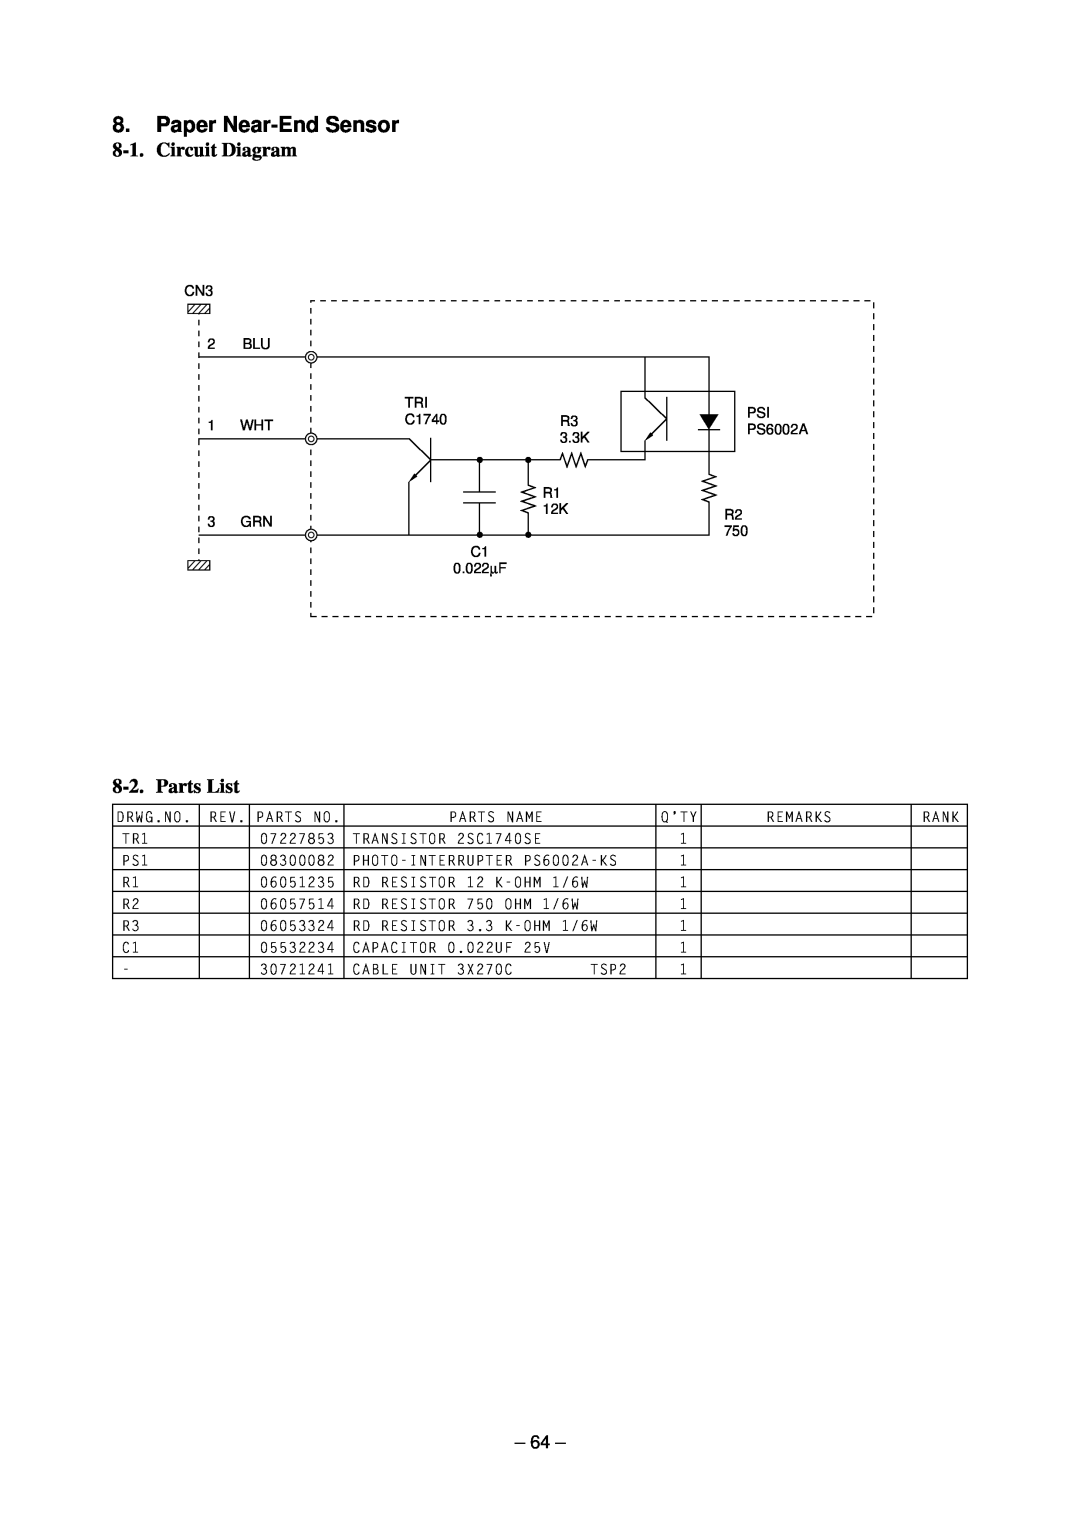 Star Micronics TSP200 technical manual Paper Near-End Sensor, Circuit Diagram, Parts List 